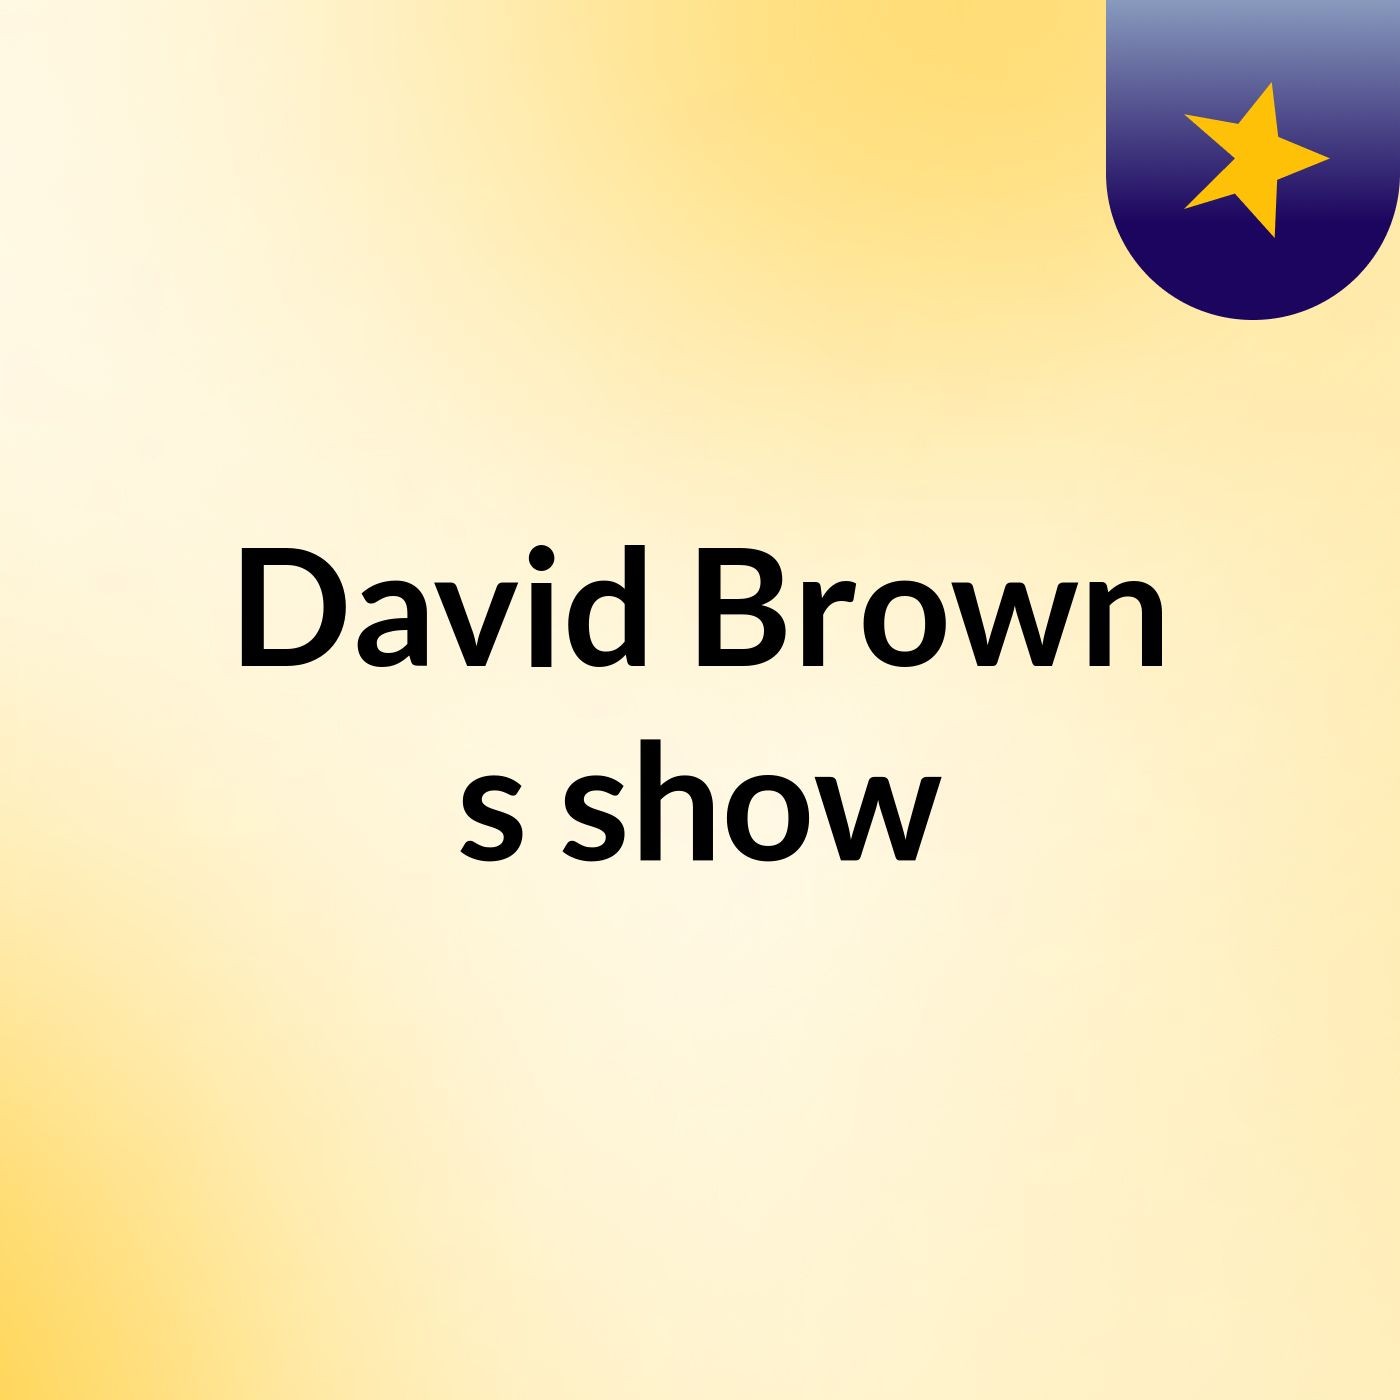 David Brown's show